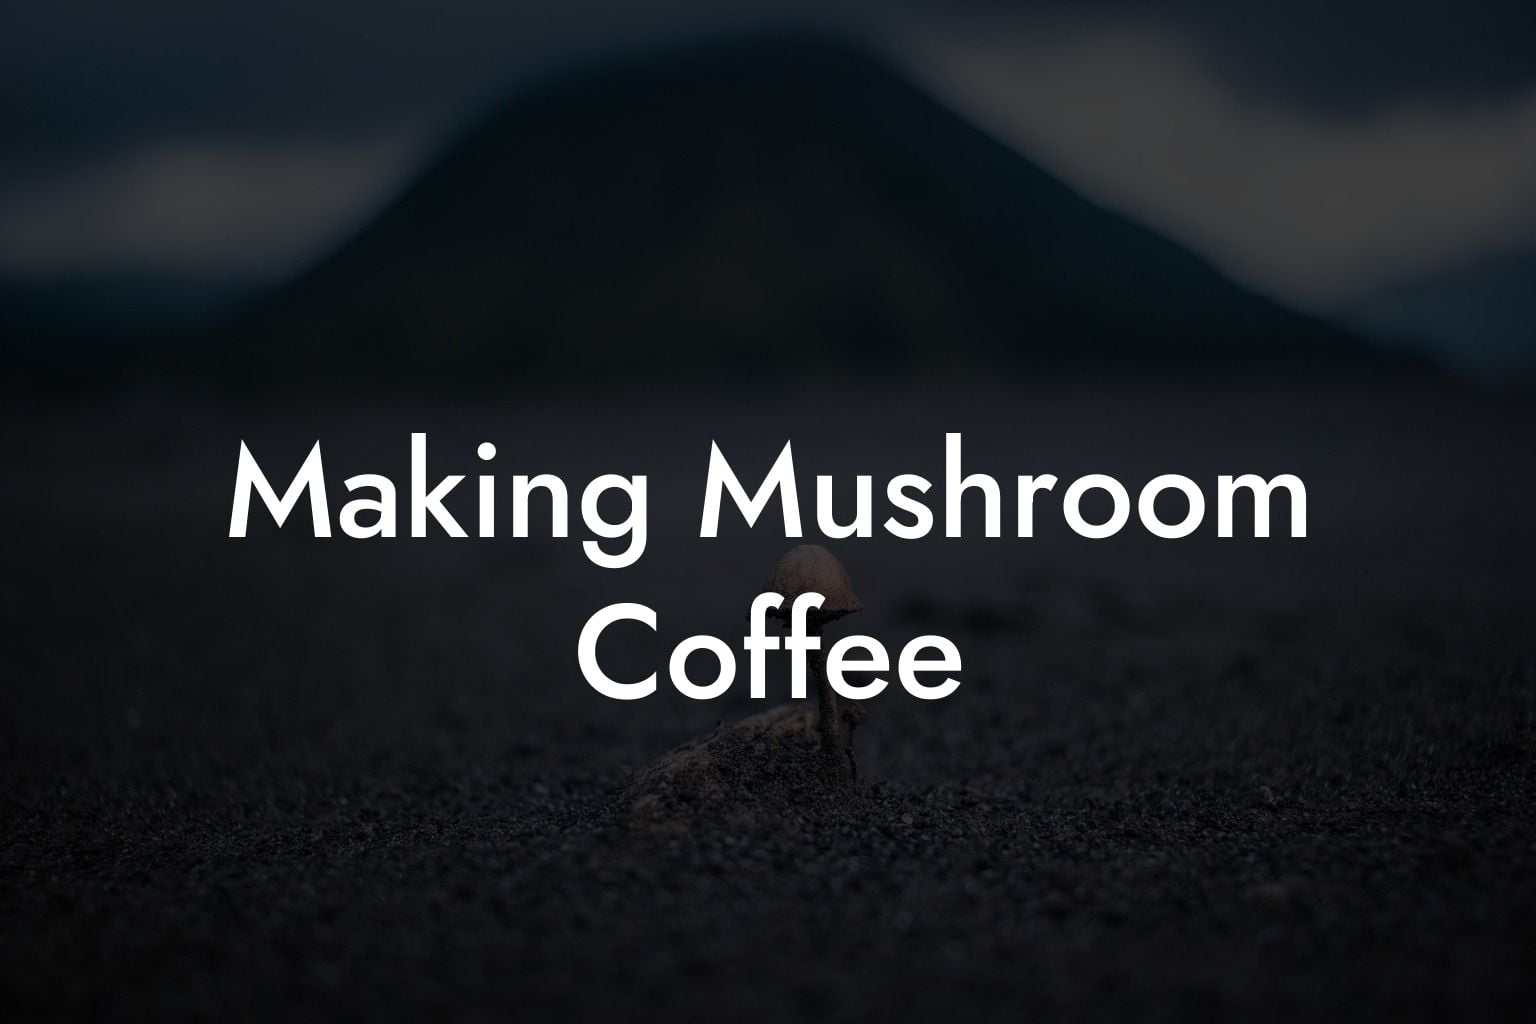 Making Mushroom Coffee